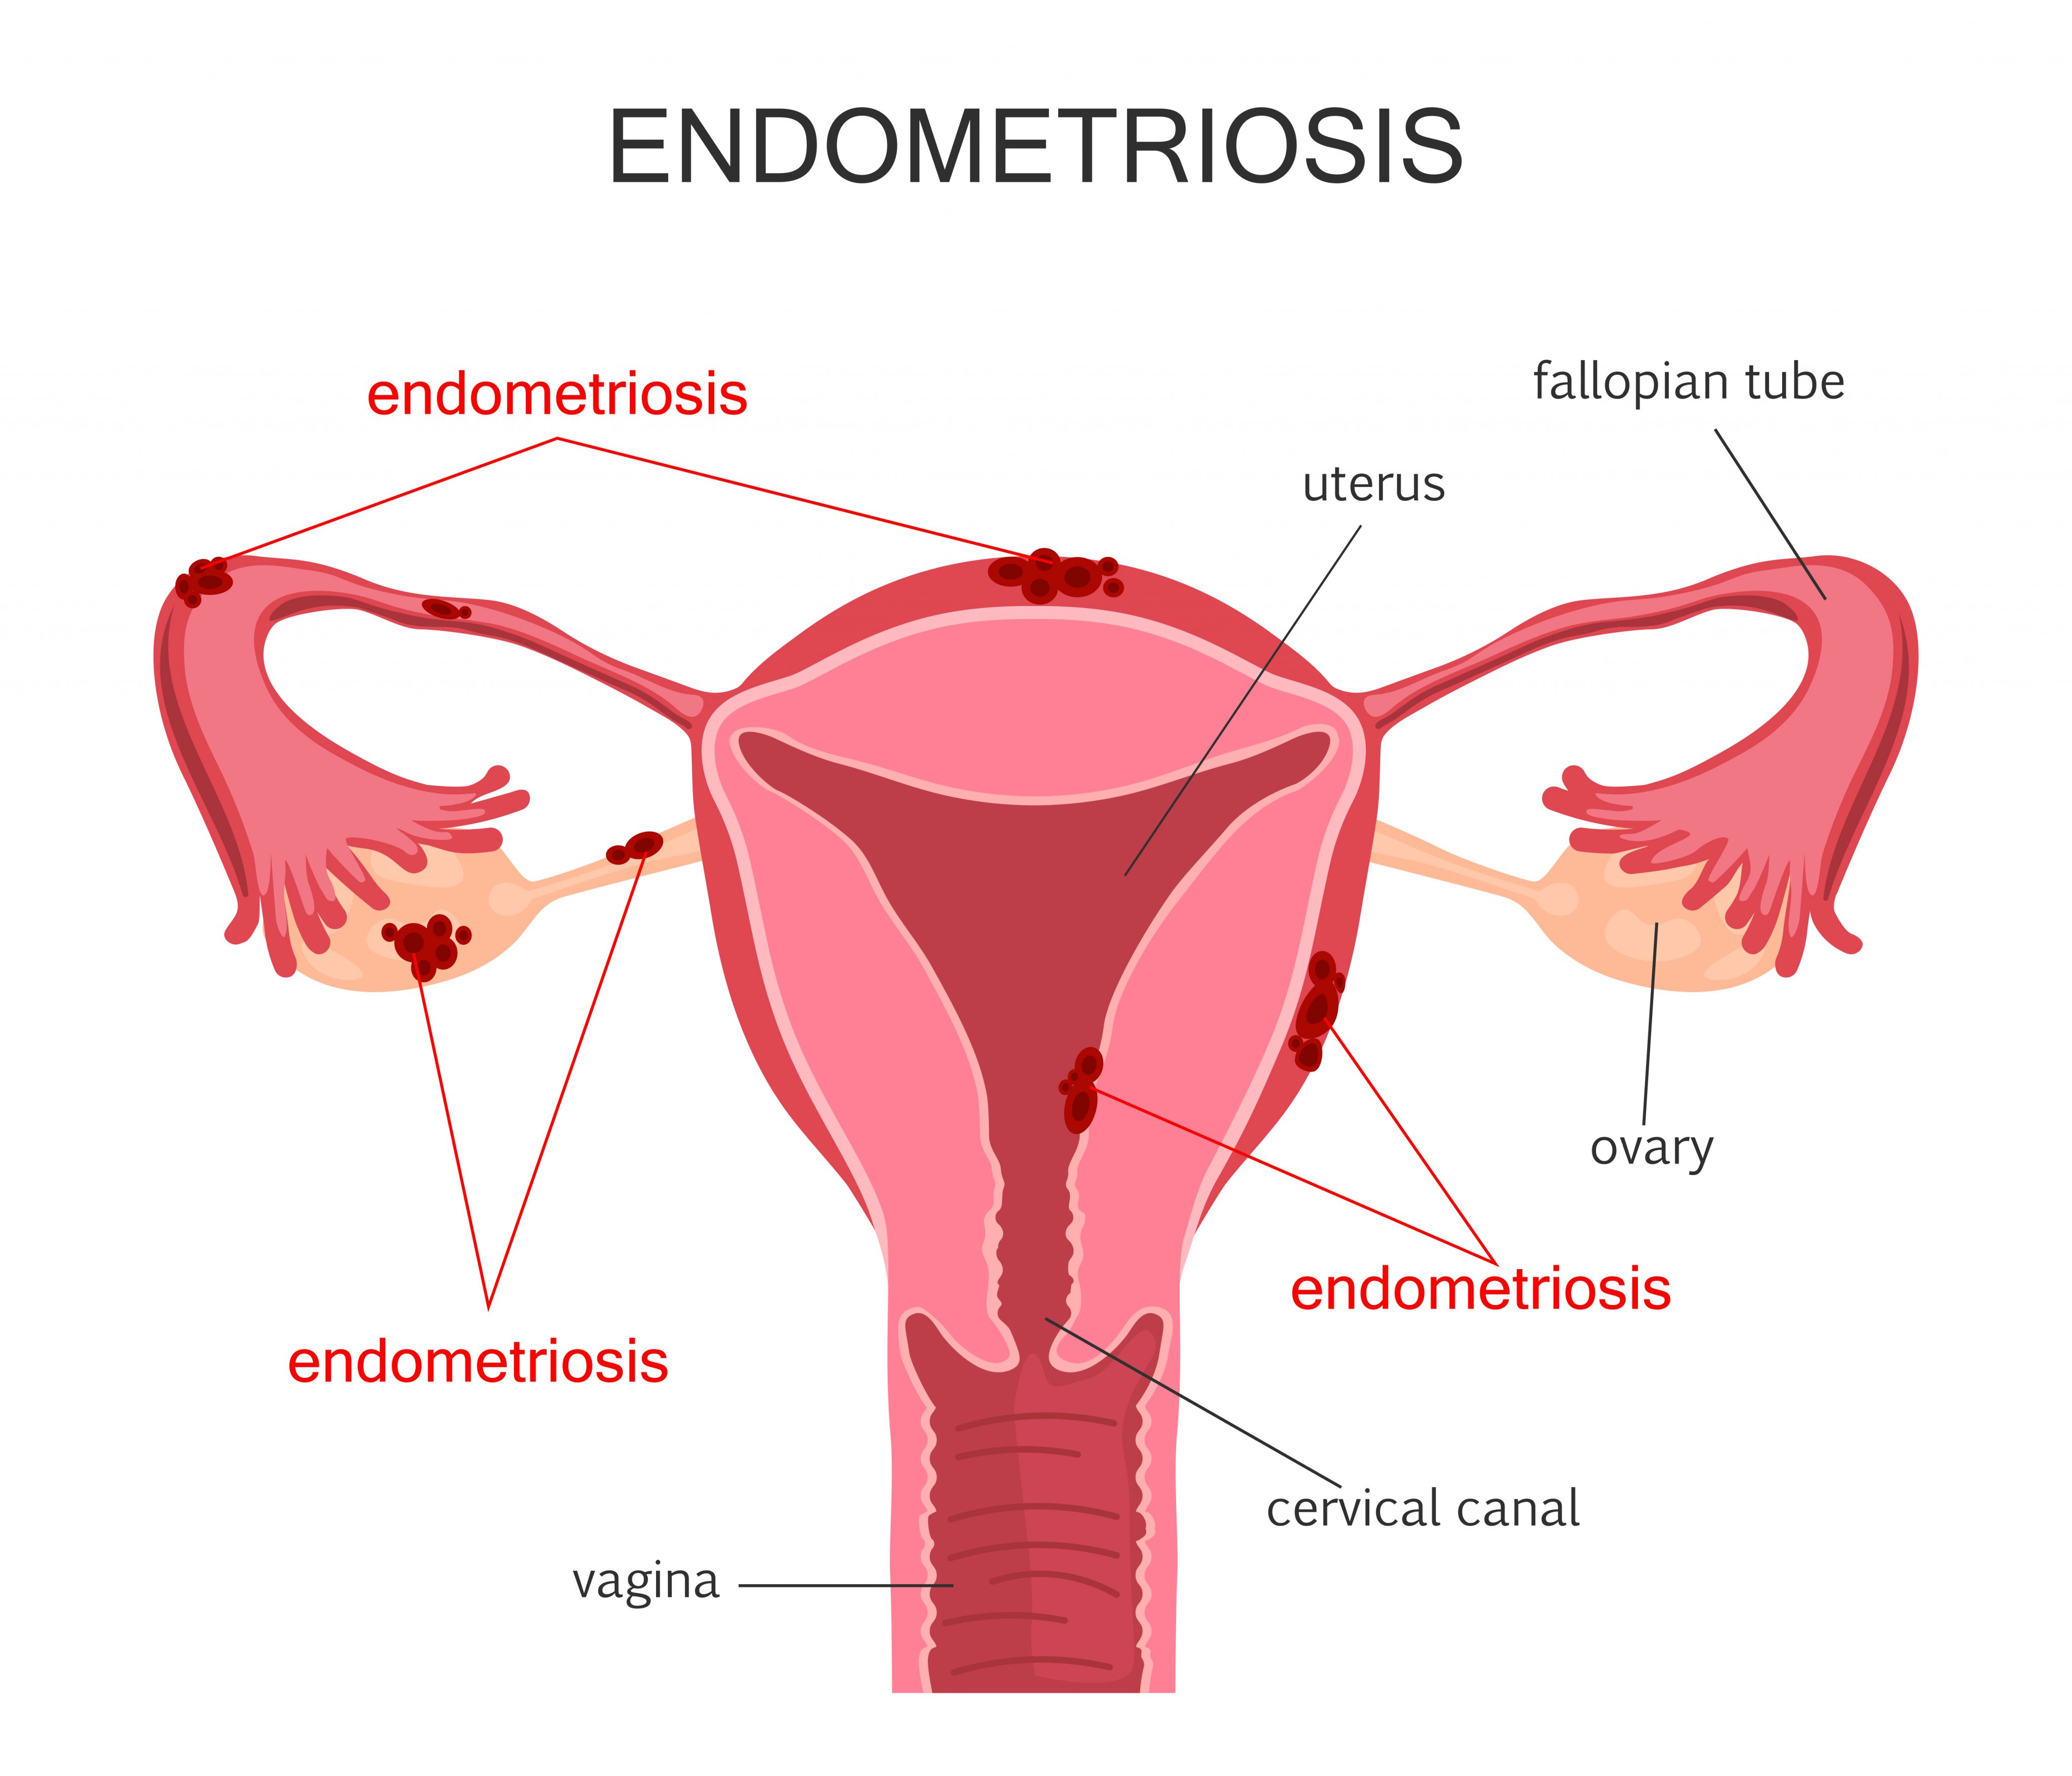 Endometriosis: A painful yet treatable condition for women | MN Spokesman-Recorder4096 x 3511